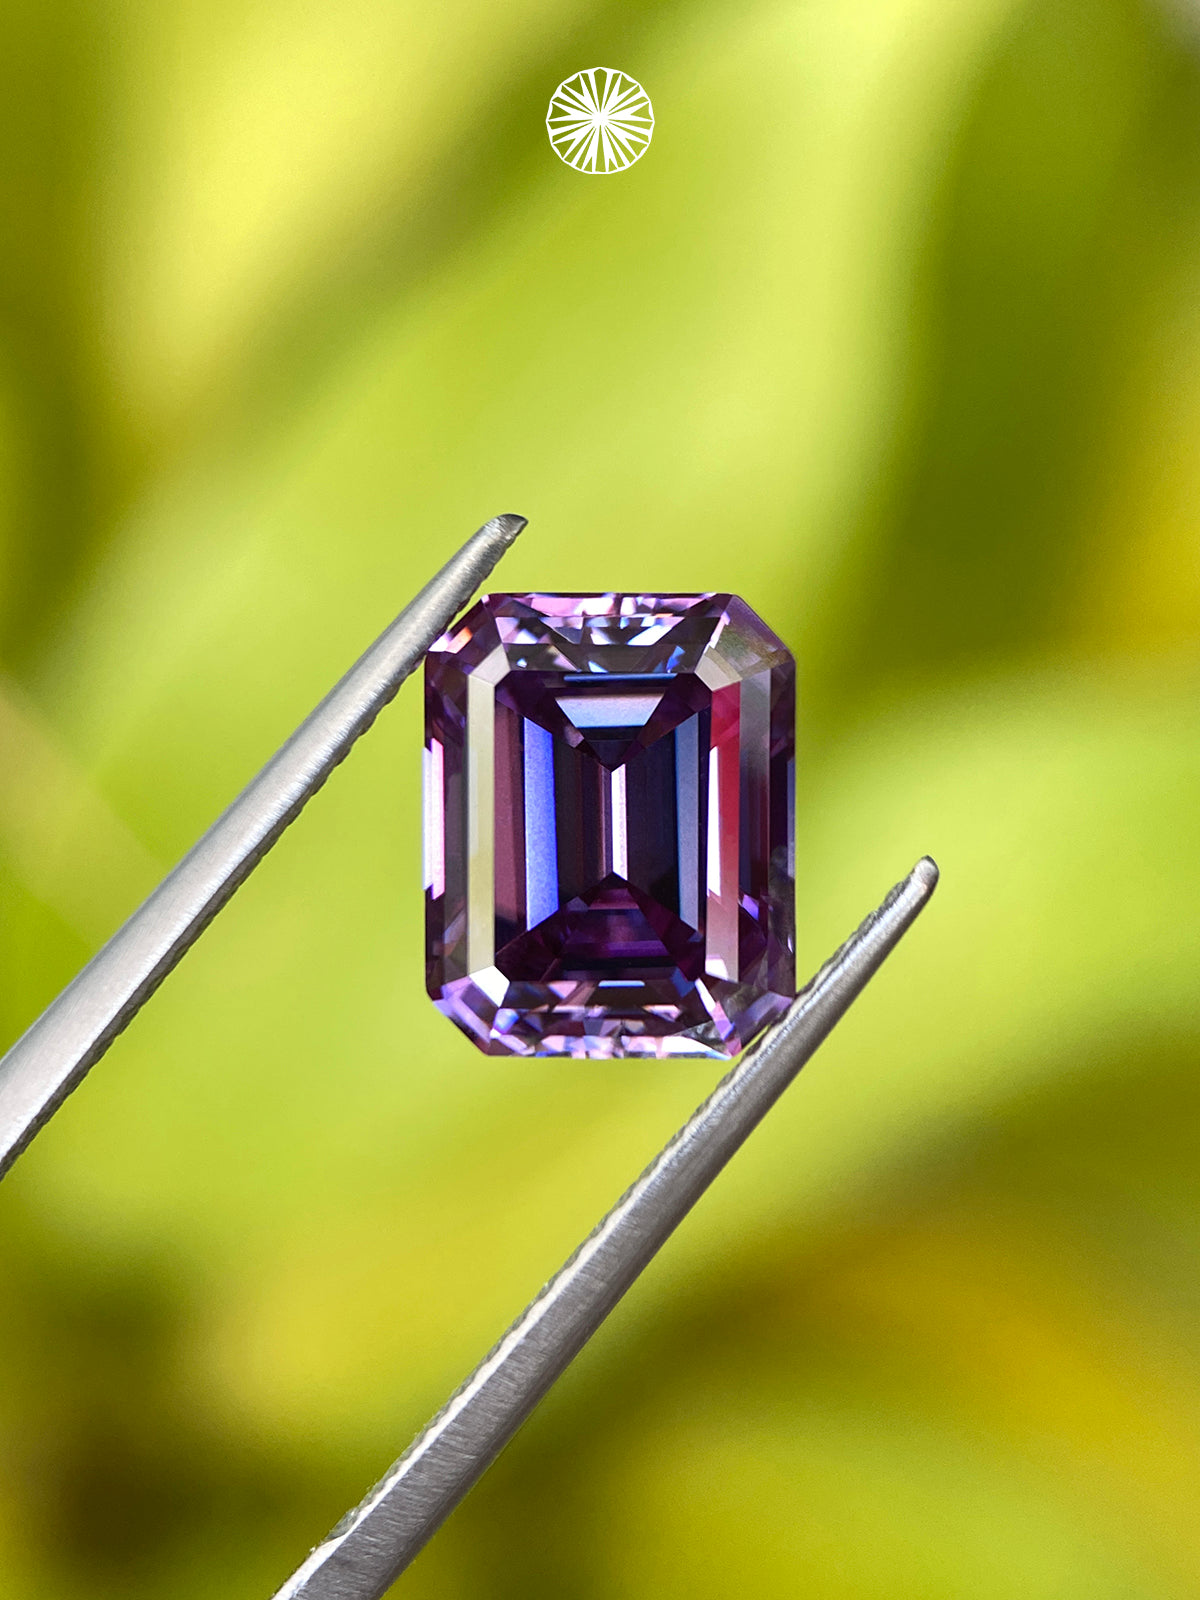 Royal Purple Emerald Cut Octangle Shape Moissanite Diamond Loose Gemstones GRA Certified Vivid Purple VVS1 Moissanite Fancy Cut for Jewelry Making